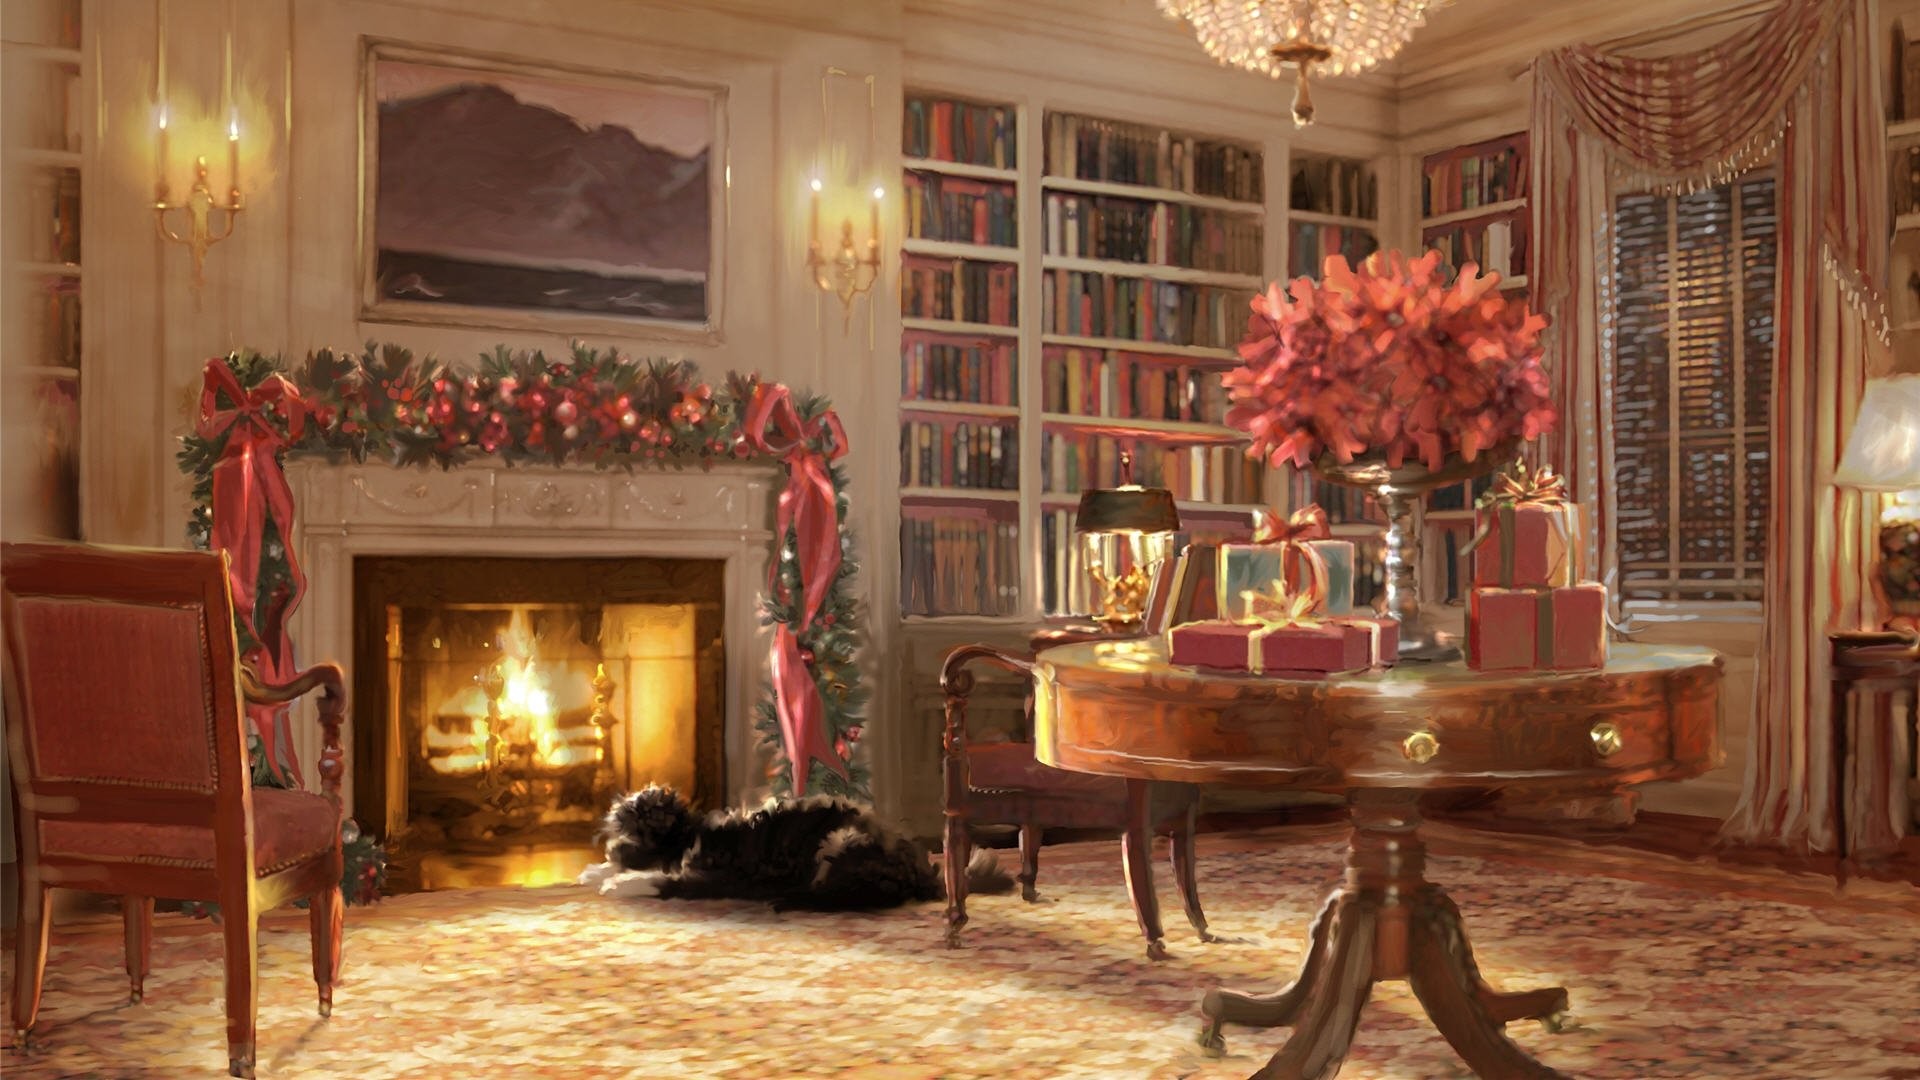 1920x1080 Christmas Fireplace Wallpaper .